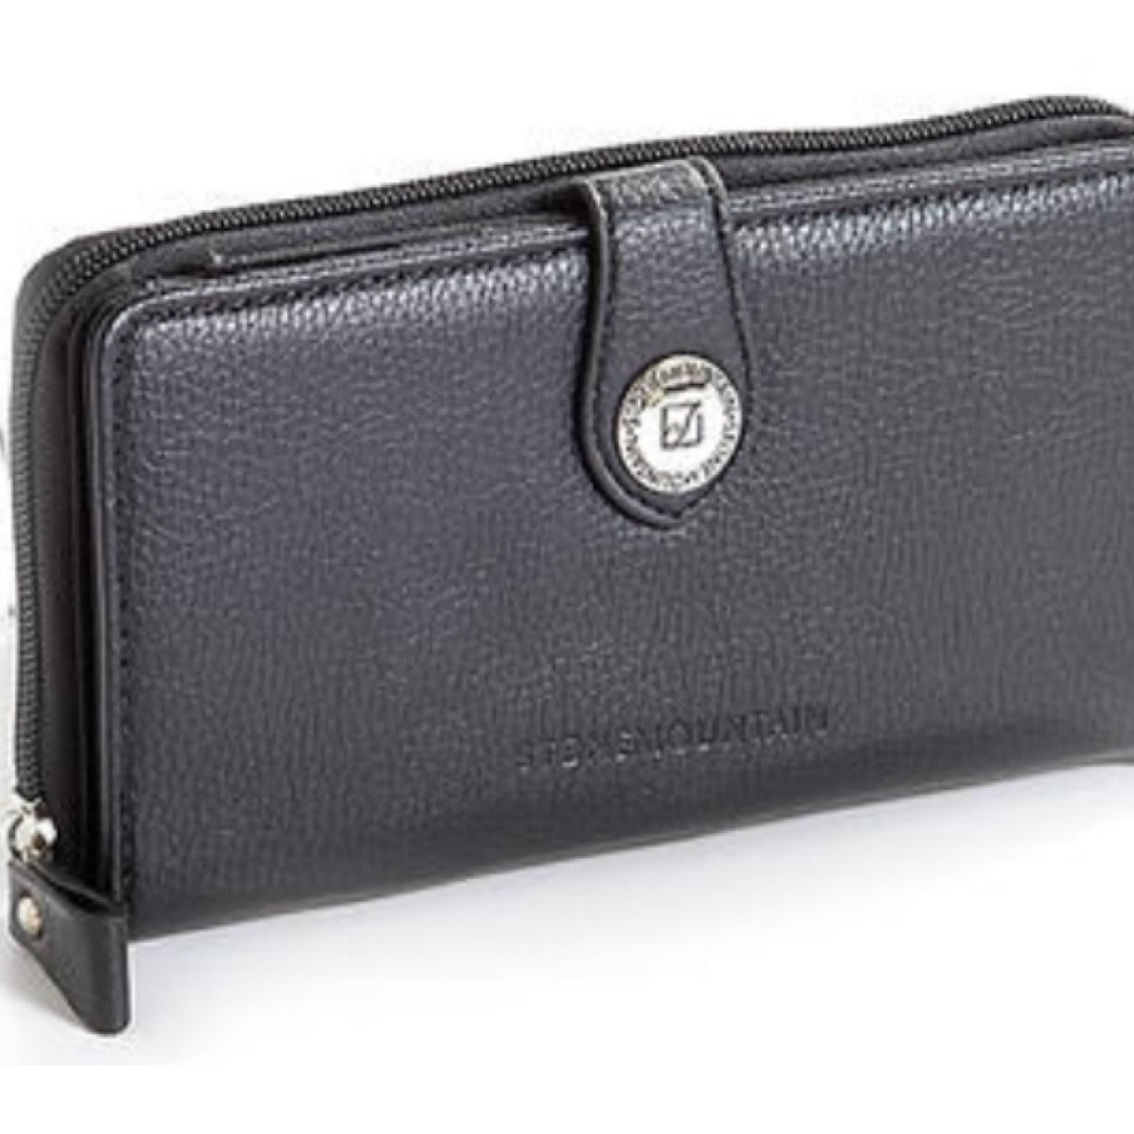 Stone Mountain Ludlow Leather Tab Zip Around Wallet Clutch GiftBox - Image 2 of 5